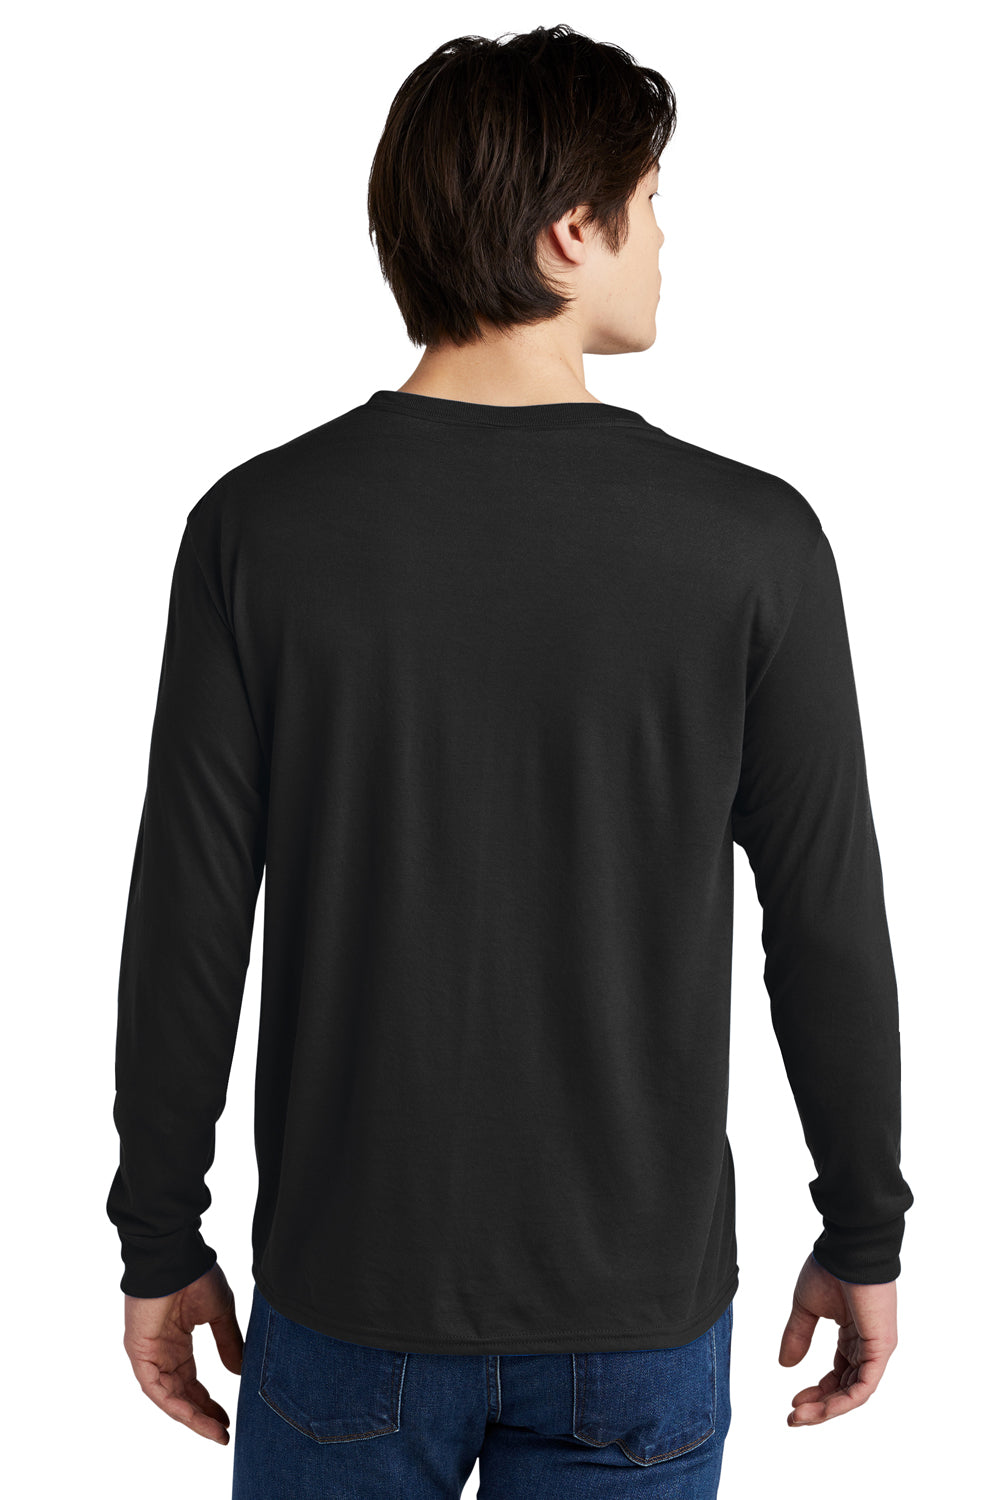 Jerzees 21LS Dri-Power Moisture Wicking Long Sleeve Crewneck T-Shirt Black Back